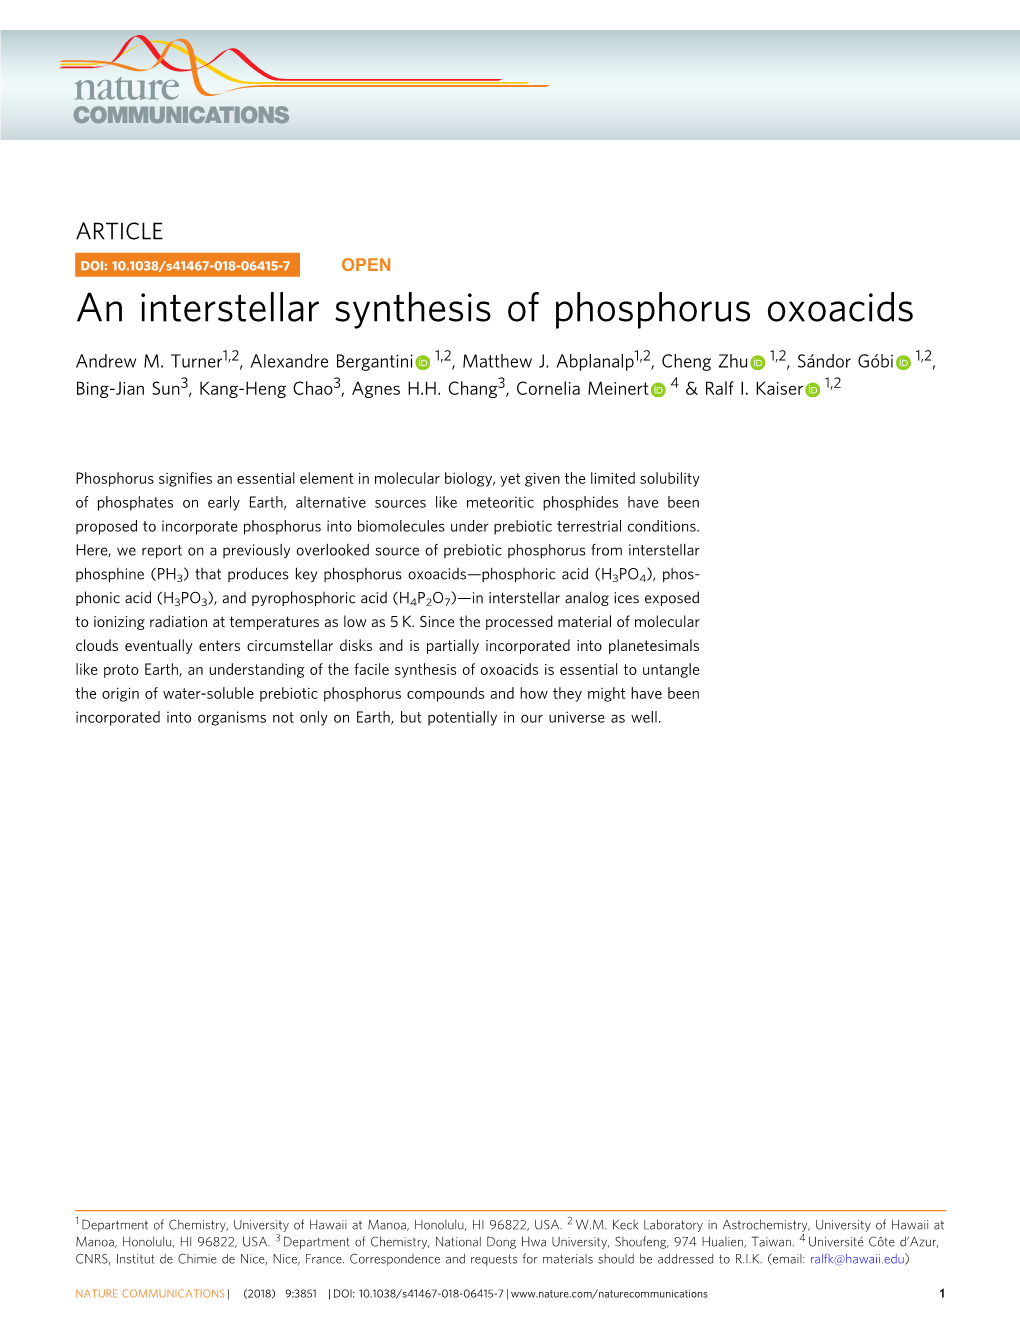 An Interstellar Synthesis of Phosphorus Oxoacids